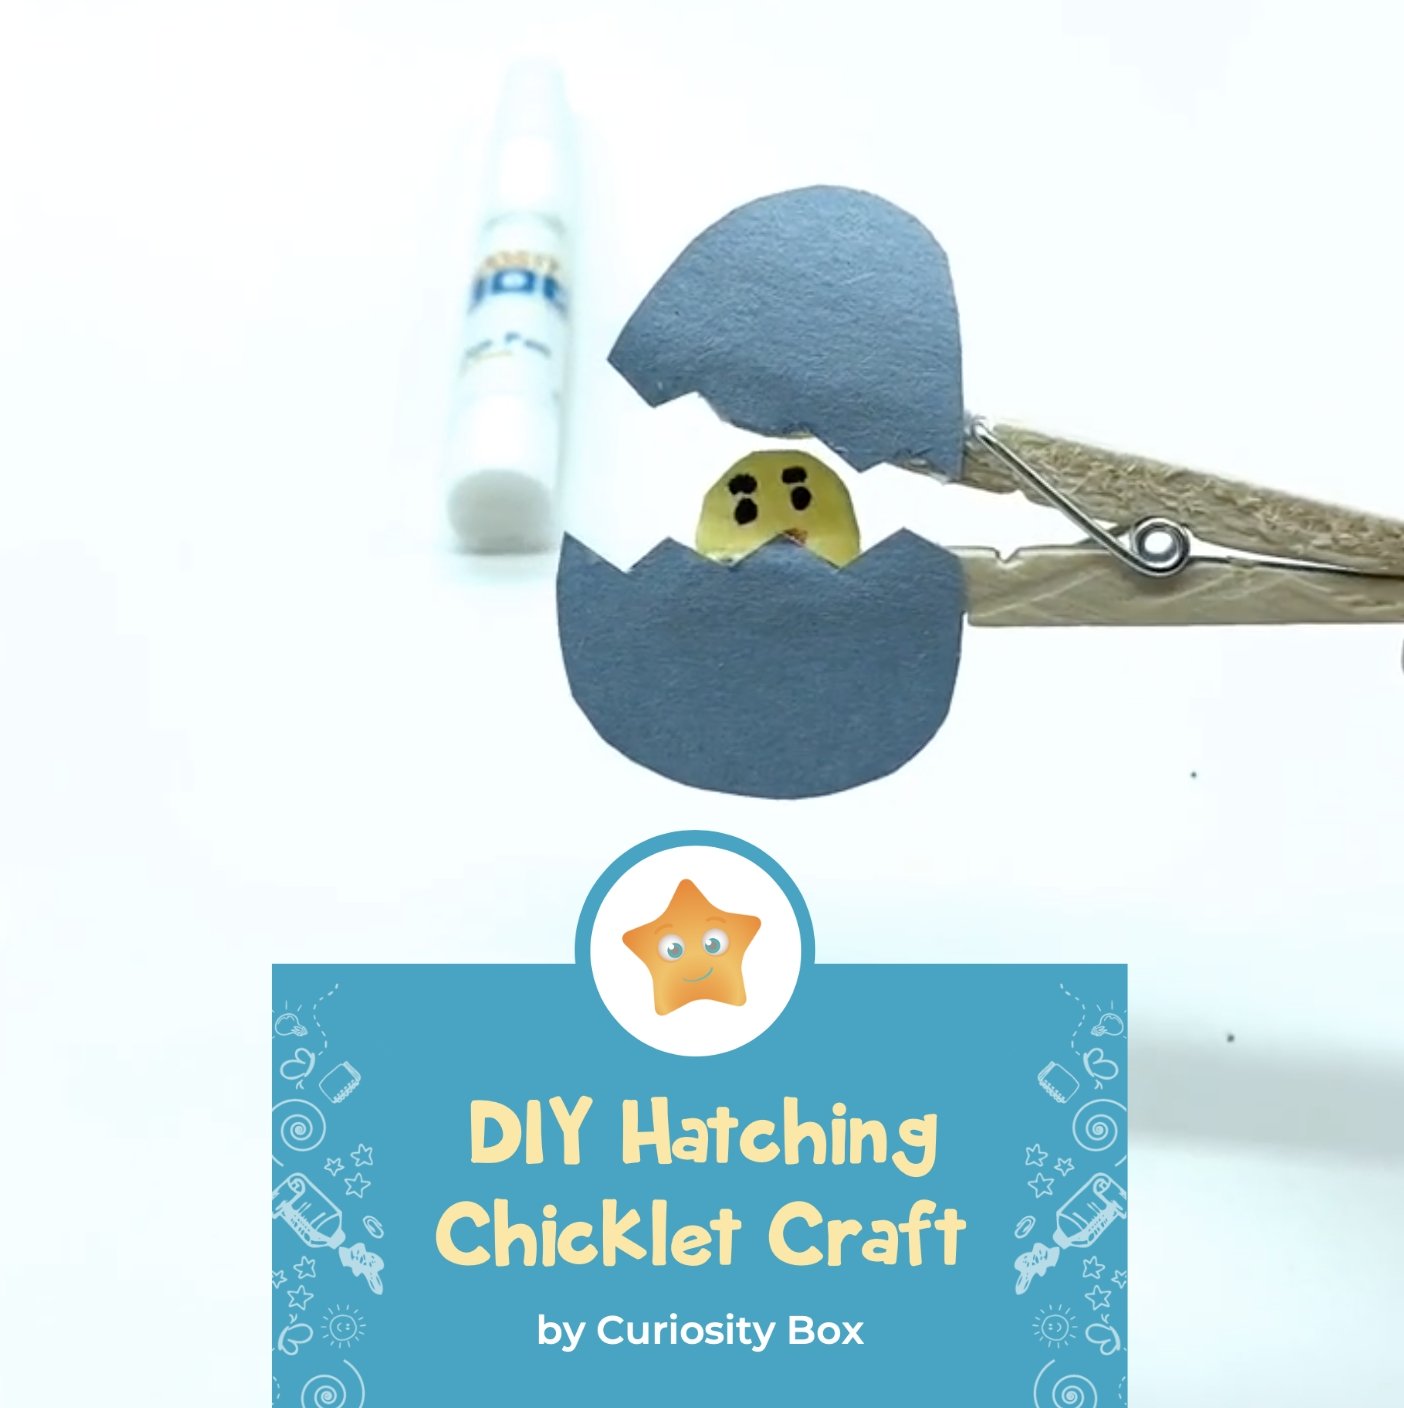 DIY Hatching Chicklet Craft